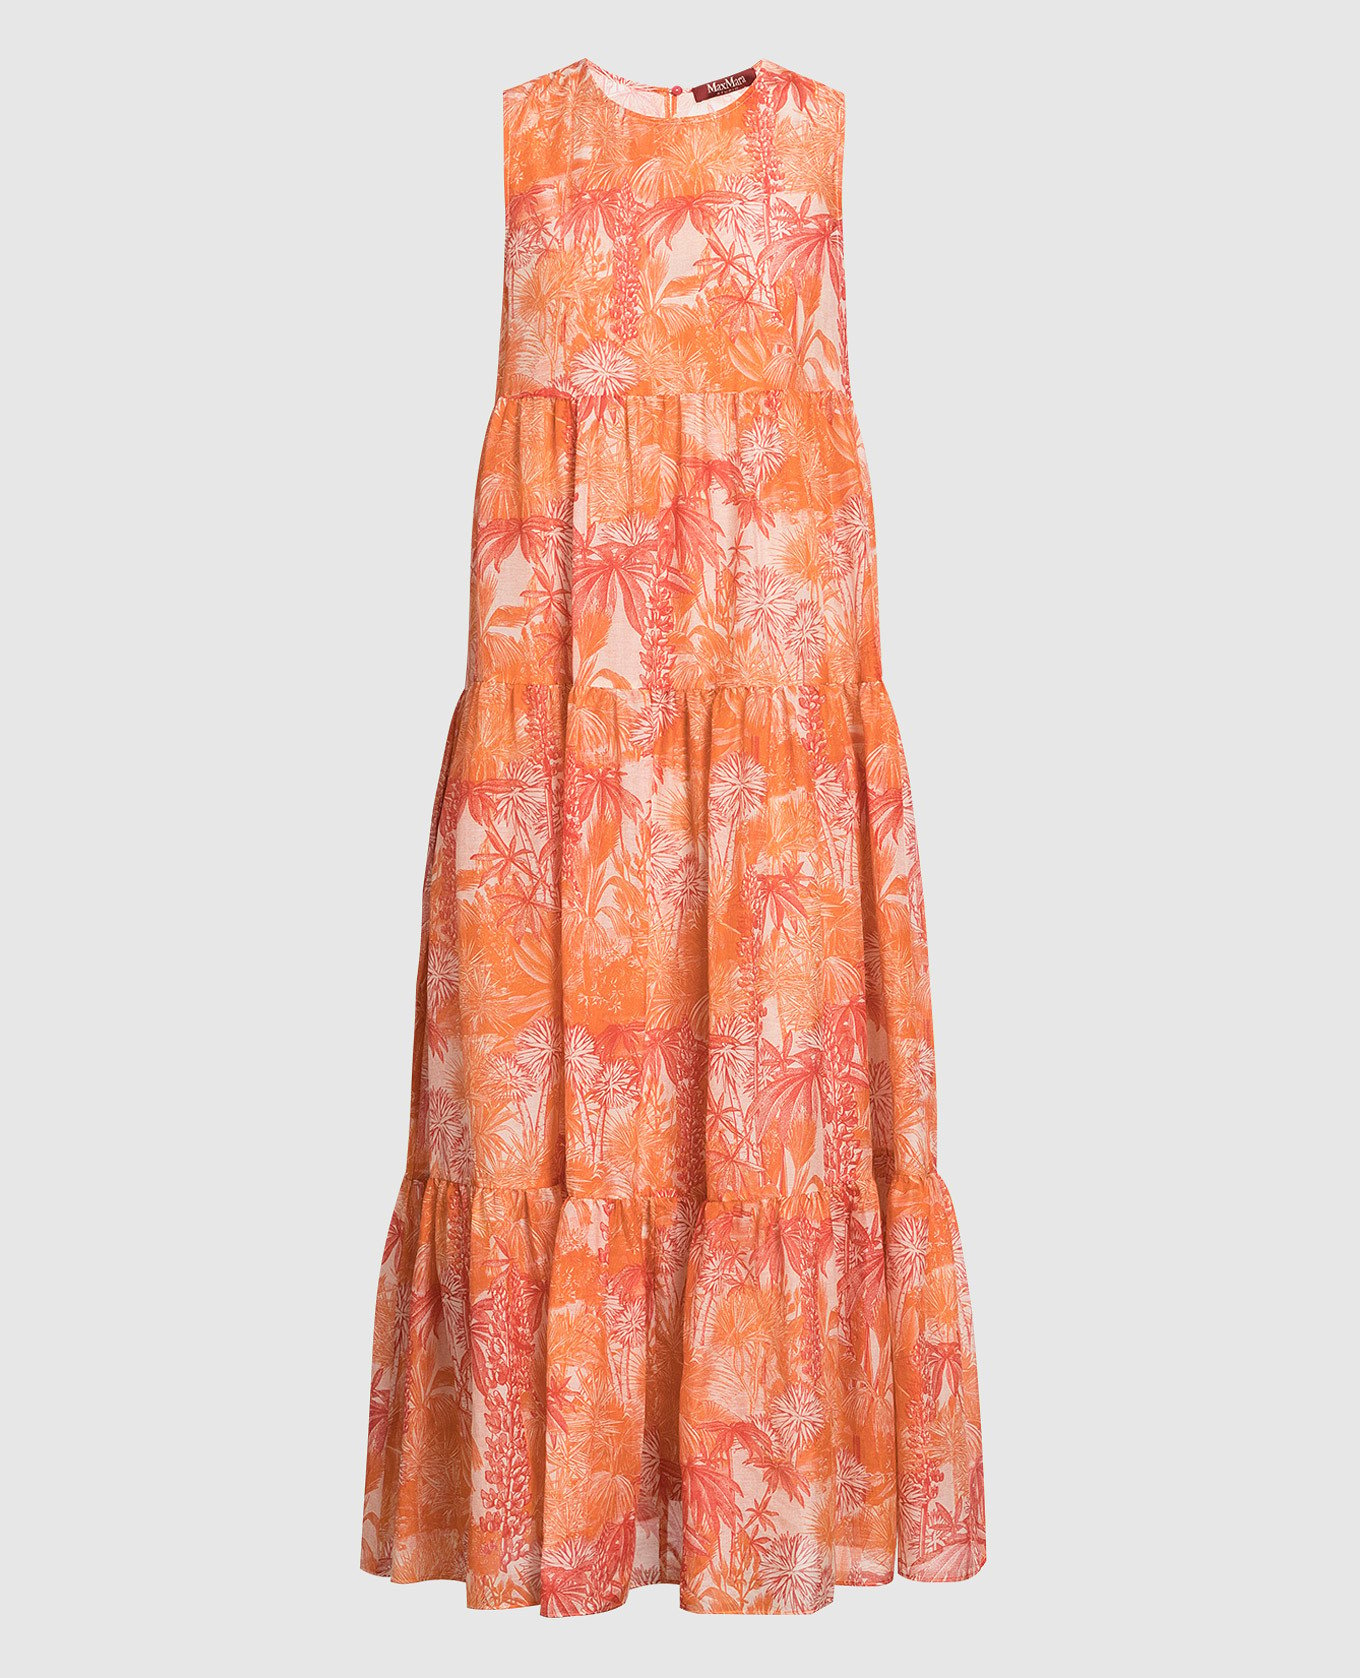 Orange dress Foce in floral print